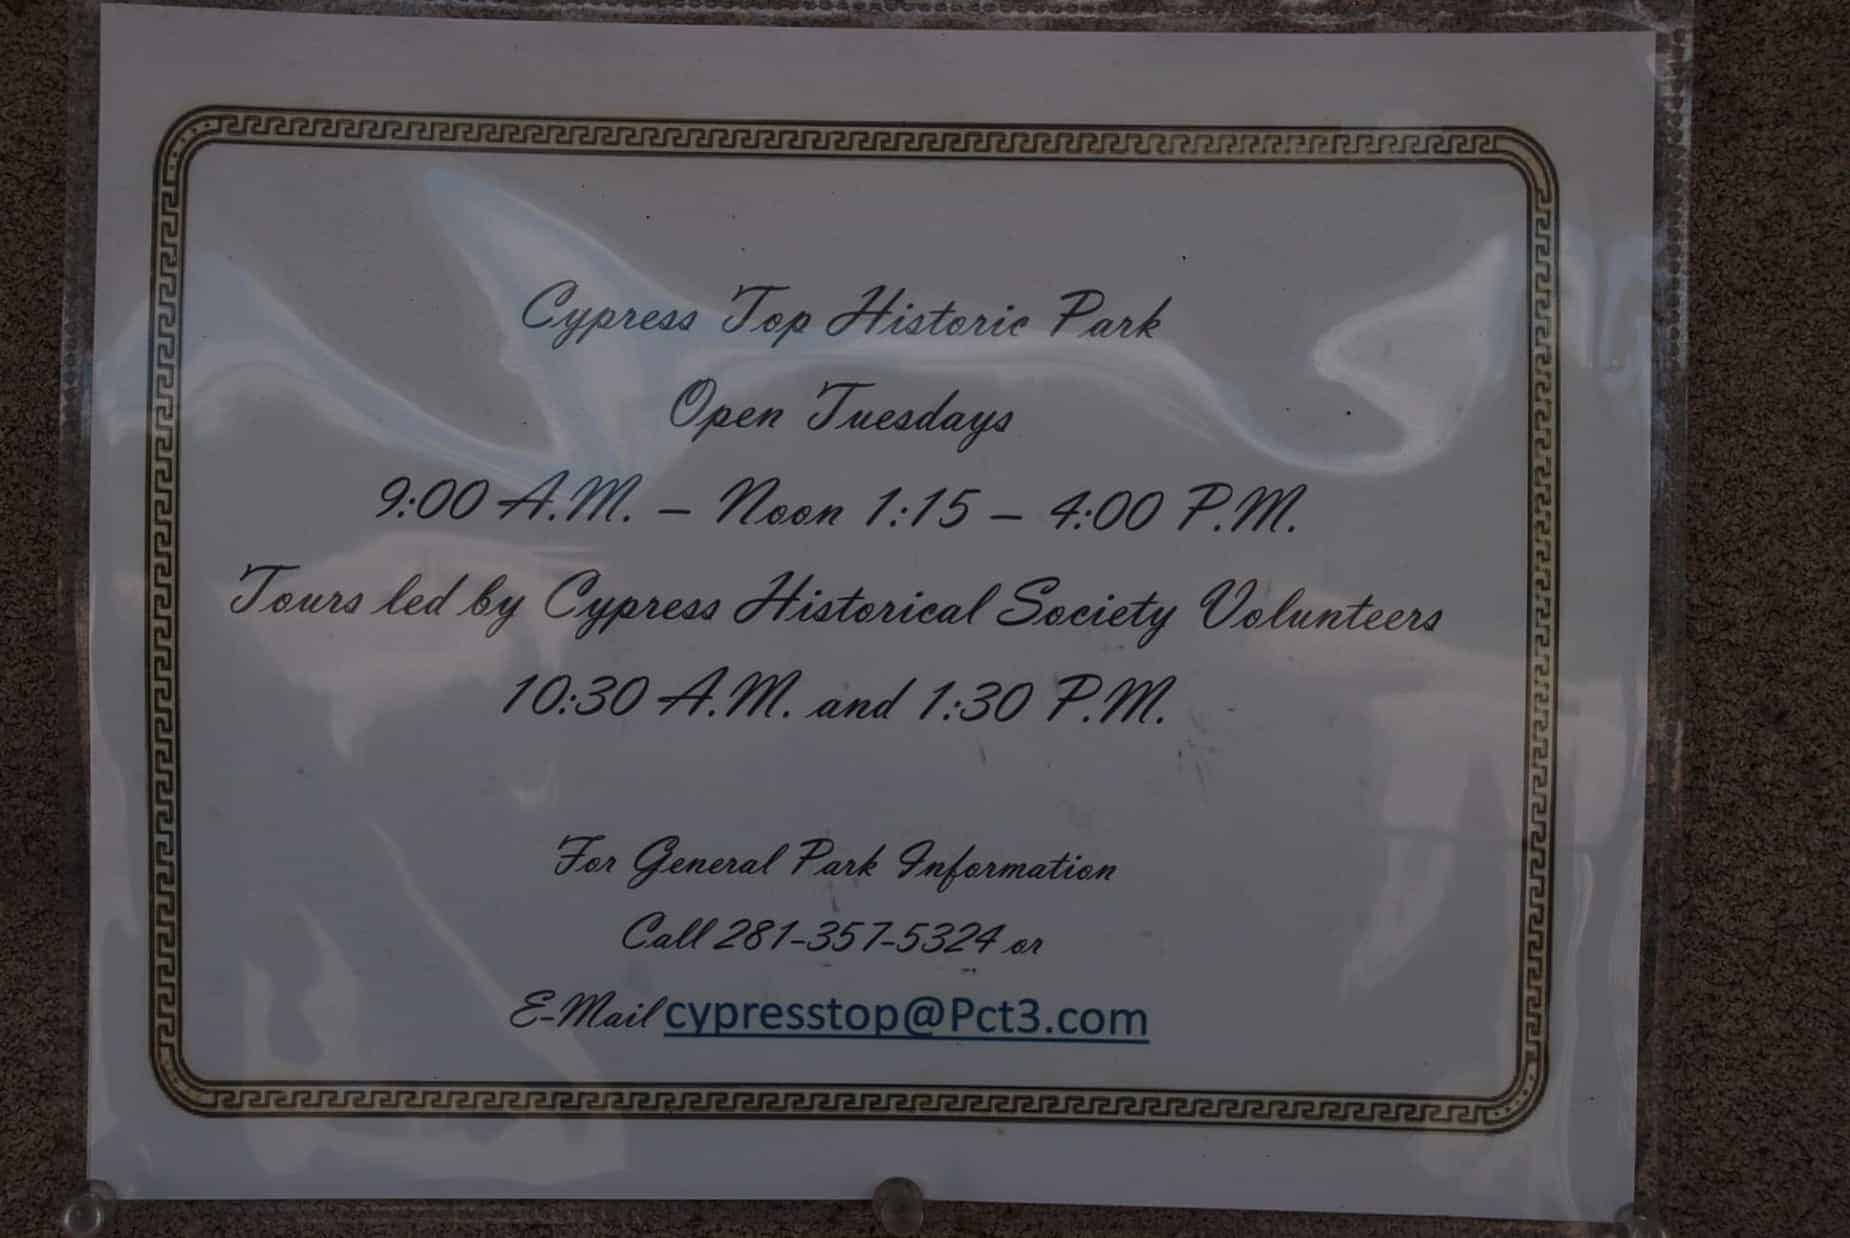 Tour Sign at Cypress Top Historic Park